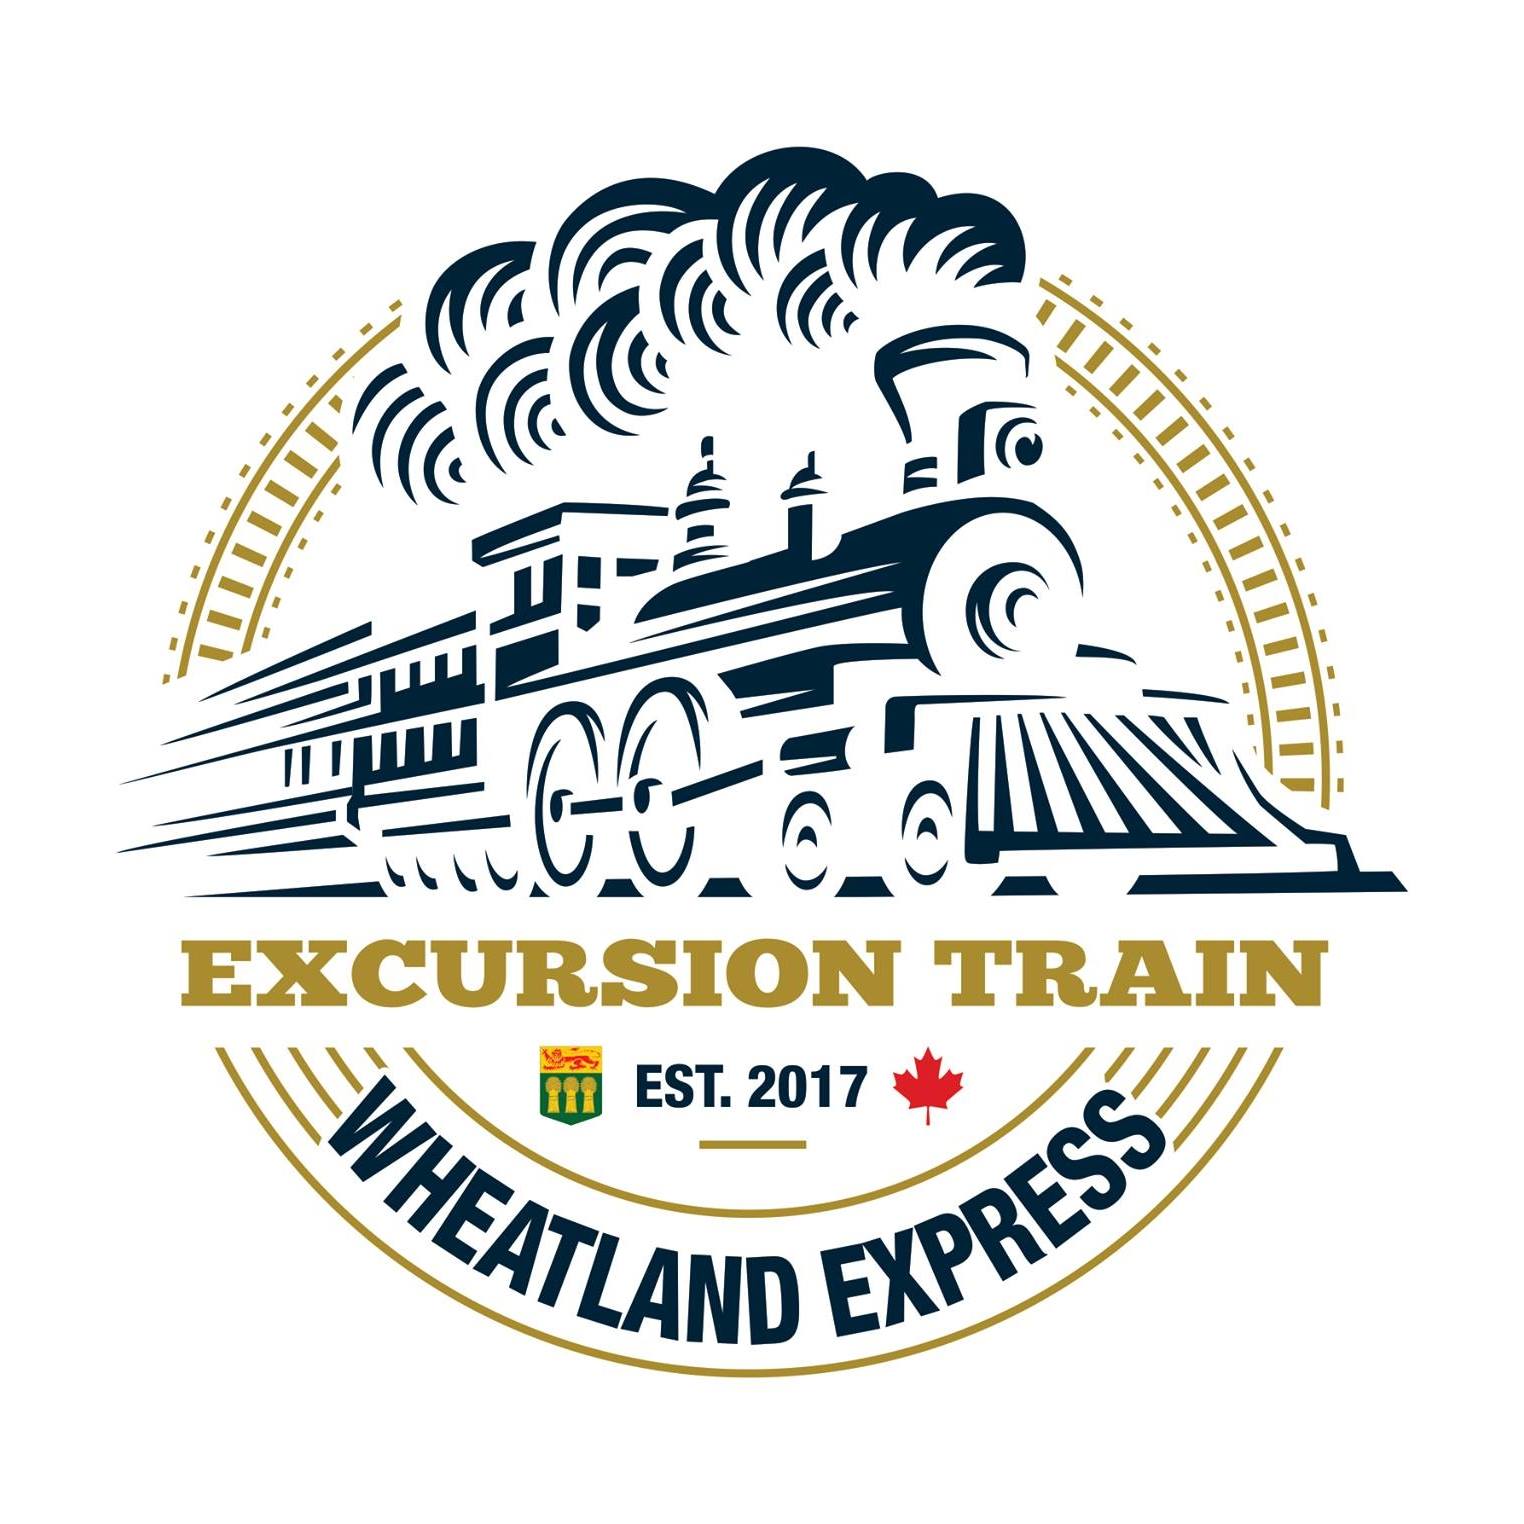 wheatland express - excursion train